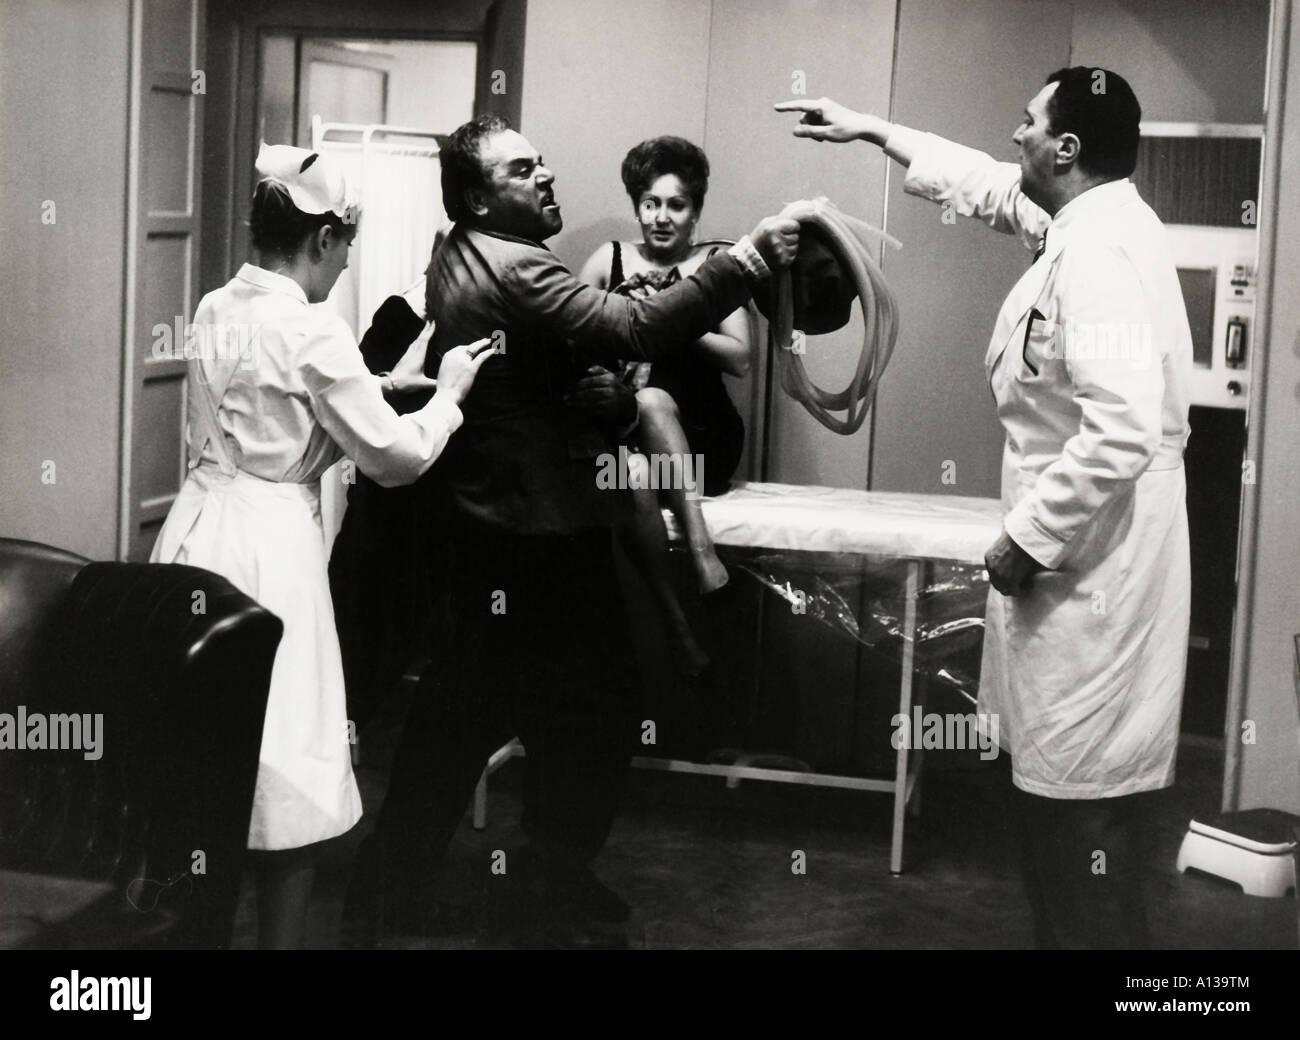 Signore e signori Year 1966 Director Pietro Germi Palme d or at 1966 Cannes Film Festival ex aequo with Un homme et une femme Stock Photo